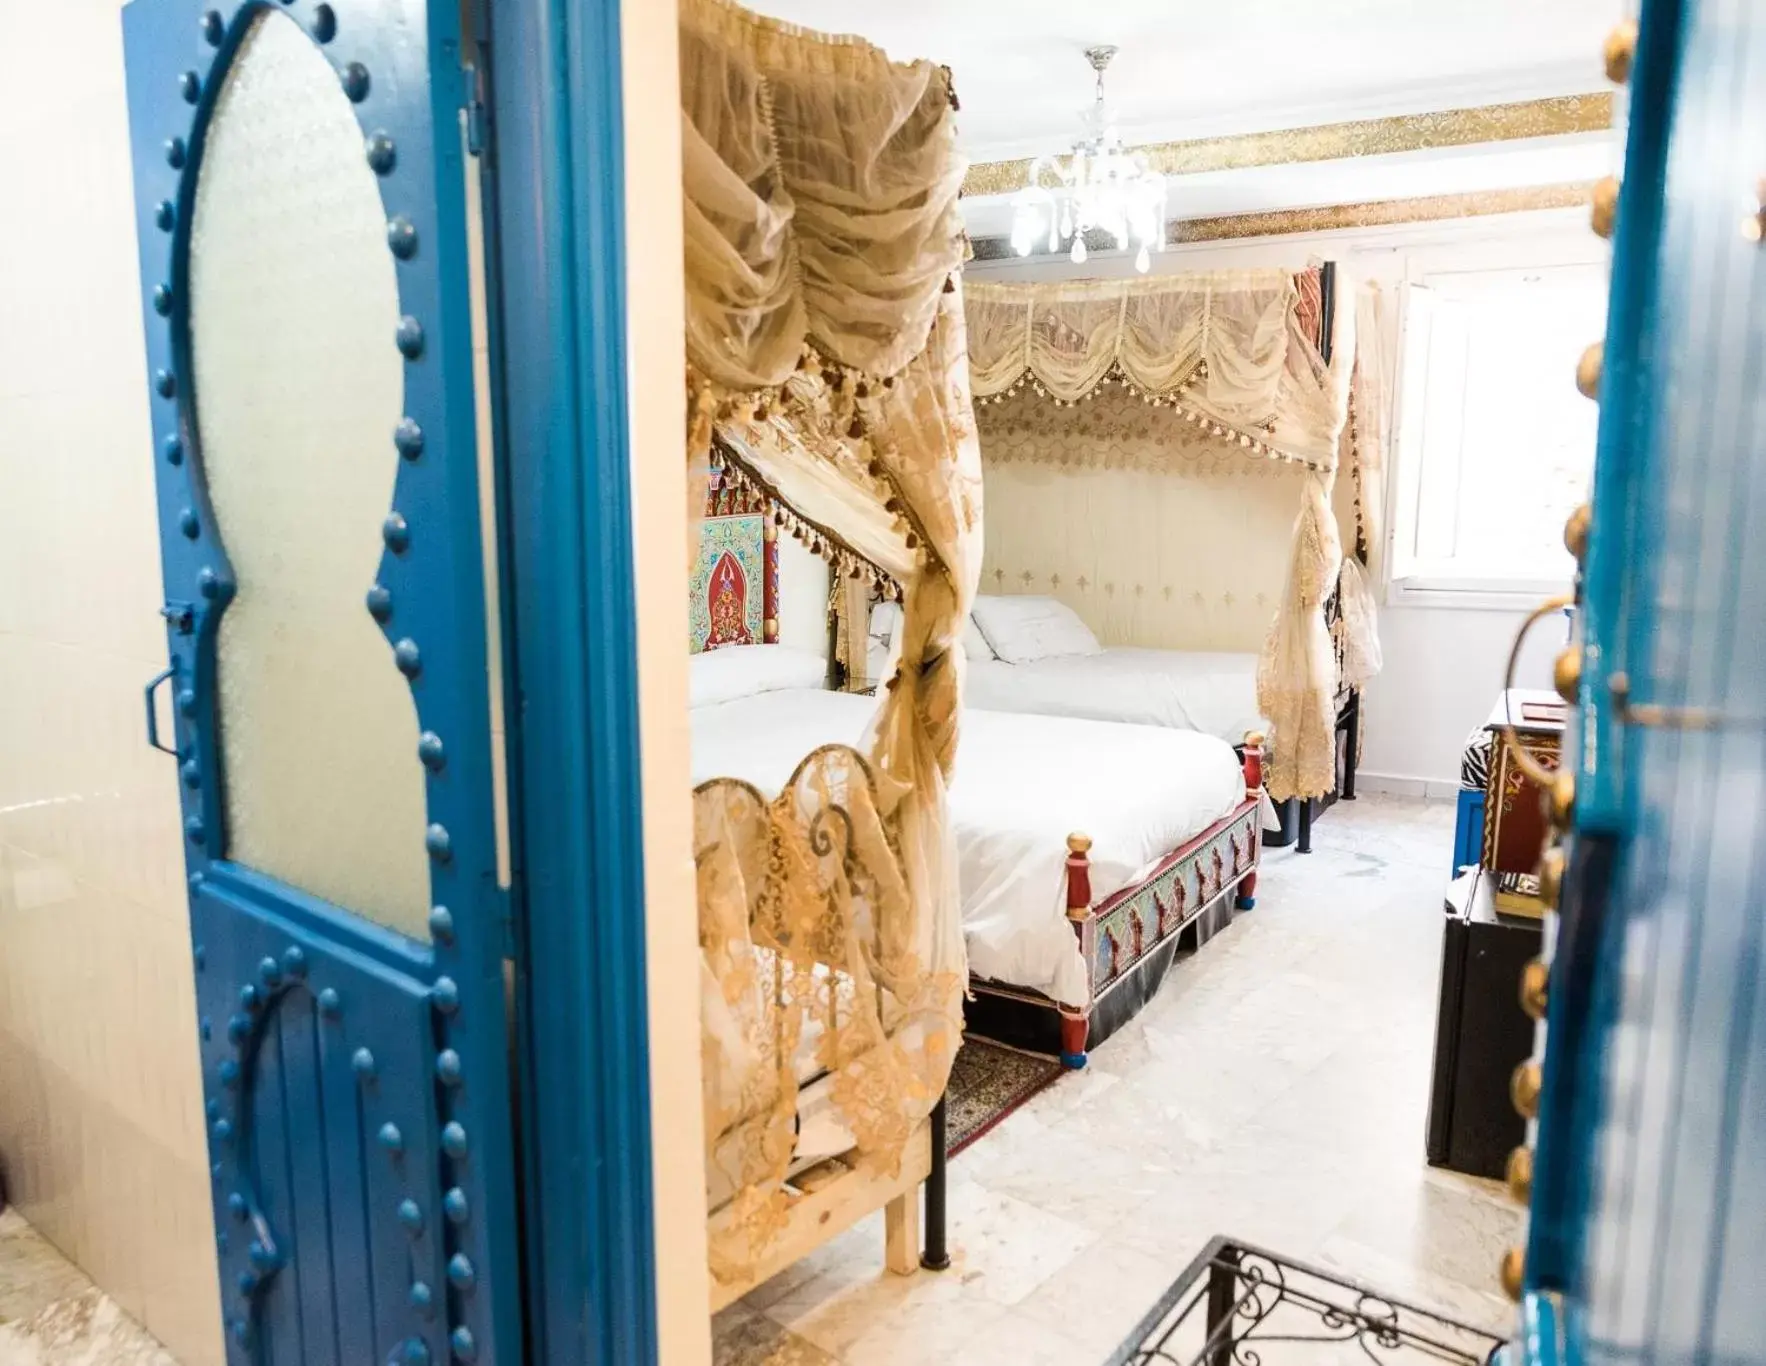 Bedroom in Hotel Moroccan House